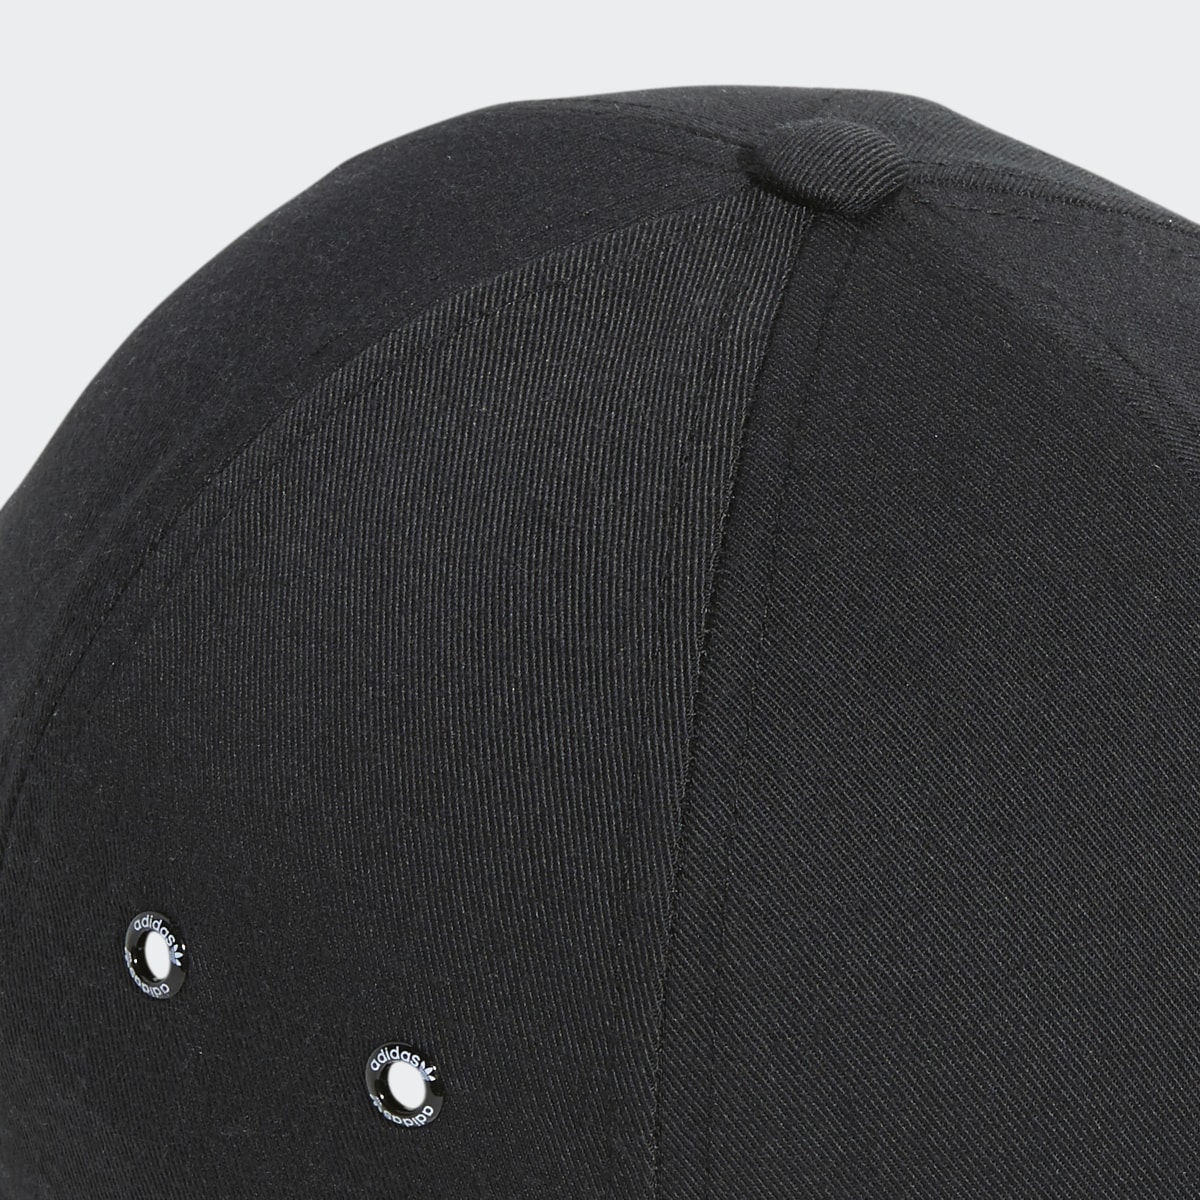 Adidas Union Strapback Hat. 7